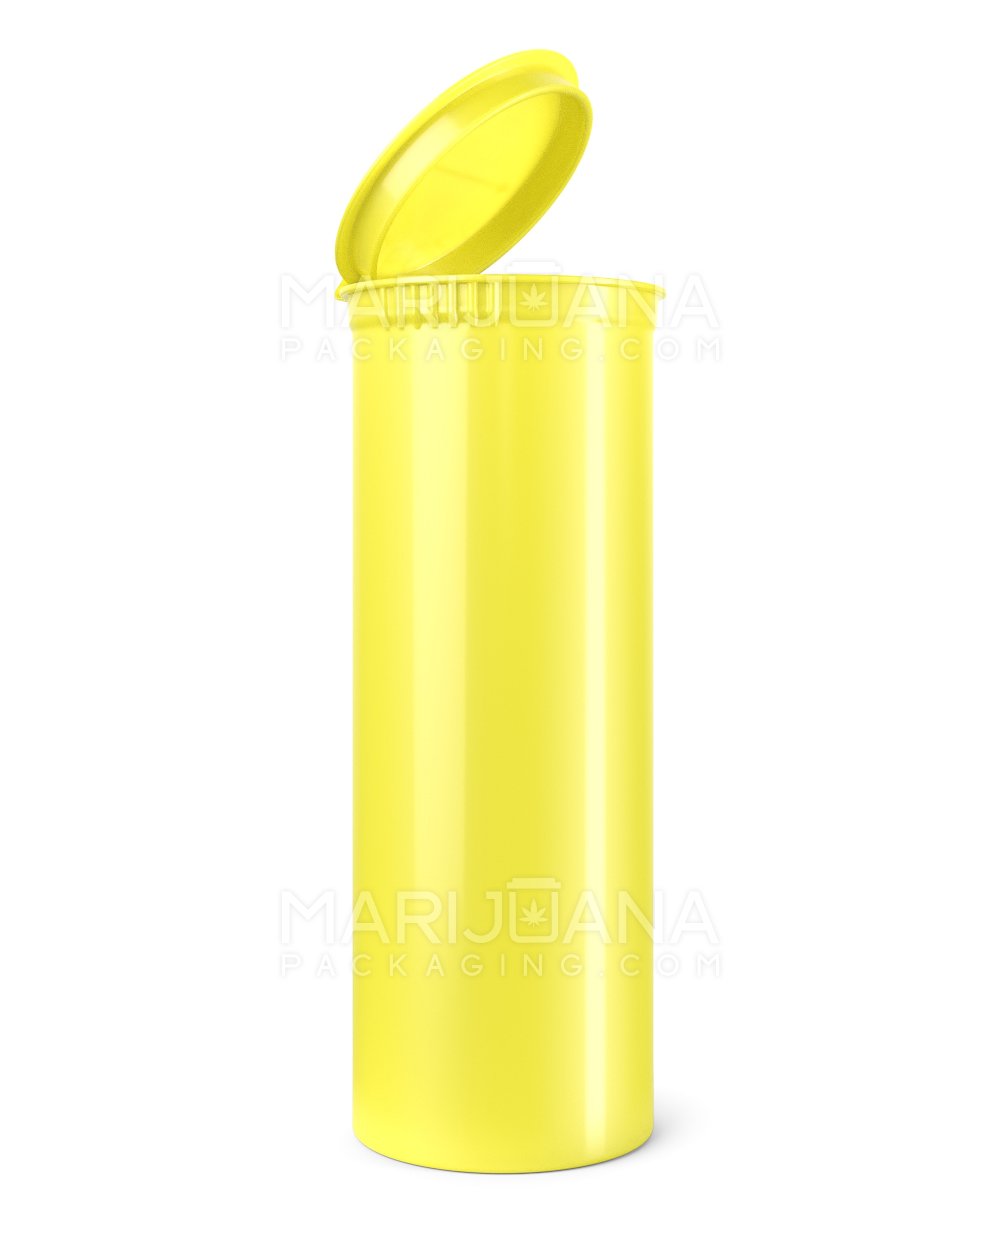 Child Resistant Opaque Lemon Pop Top Bottles | 60dr - 14g | Sample - 1